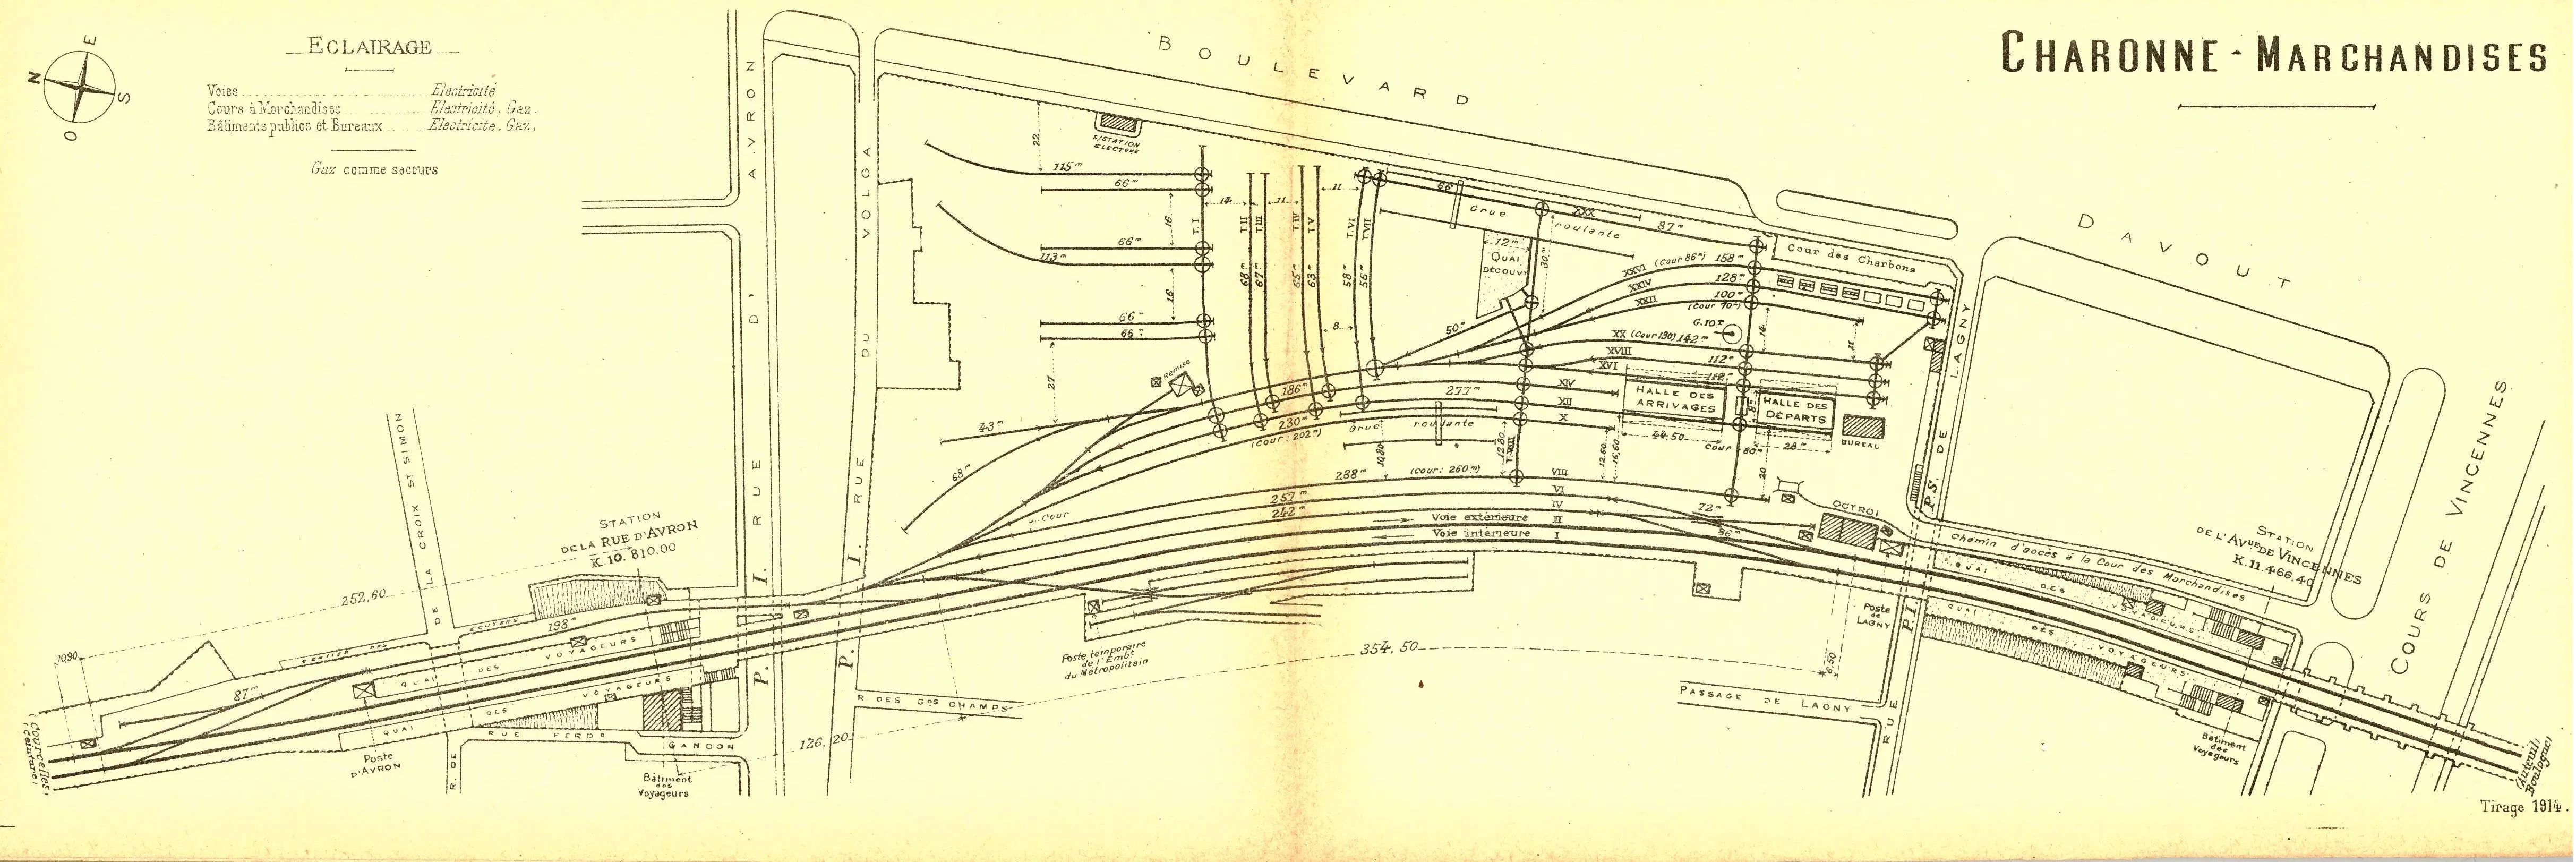 Plan des installations de la gare de Charonne-Marchandises en 1914 